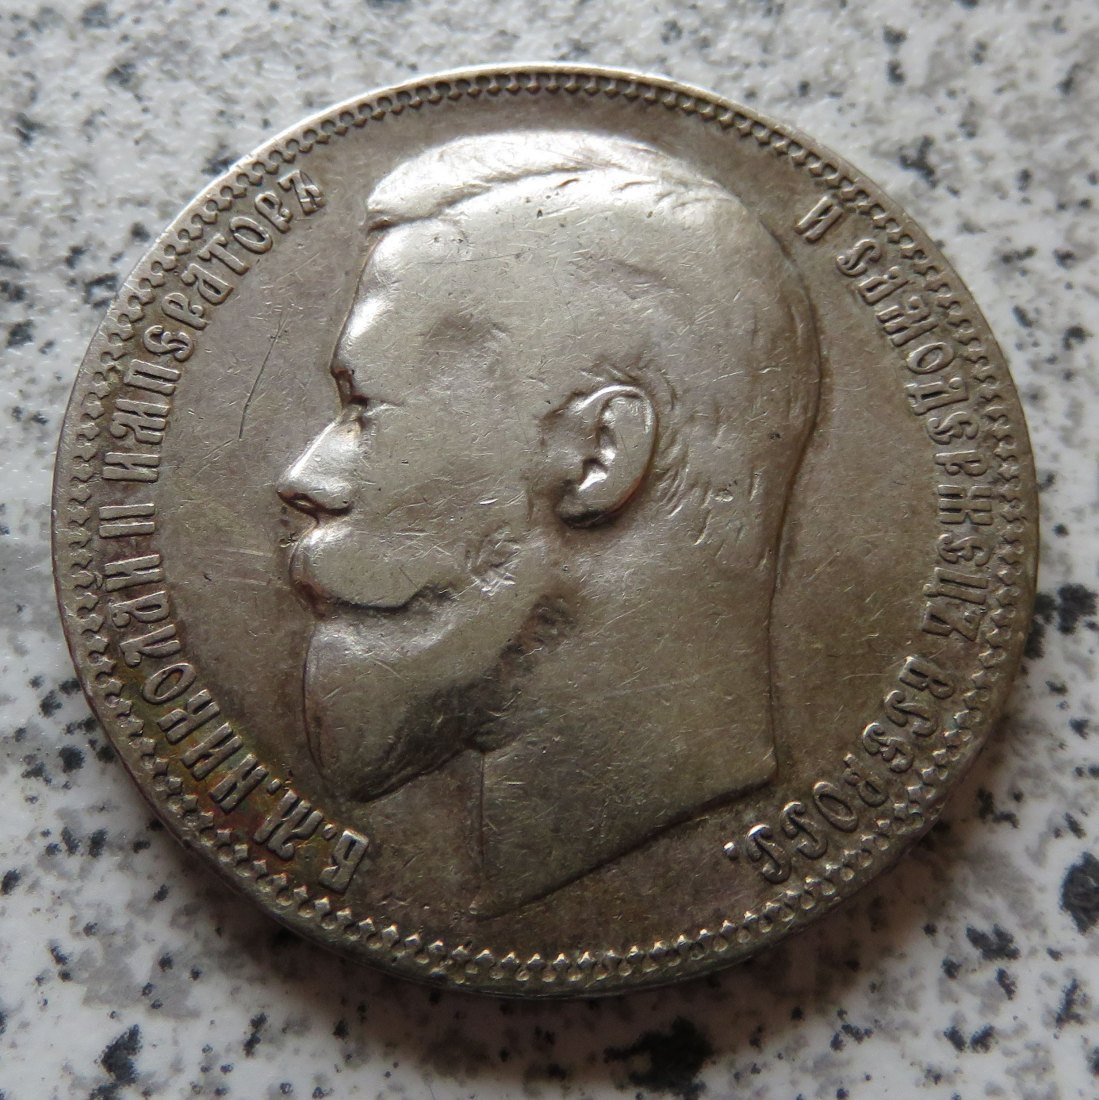  Russland 1 Rubel 1900   